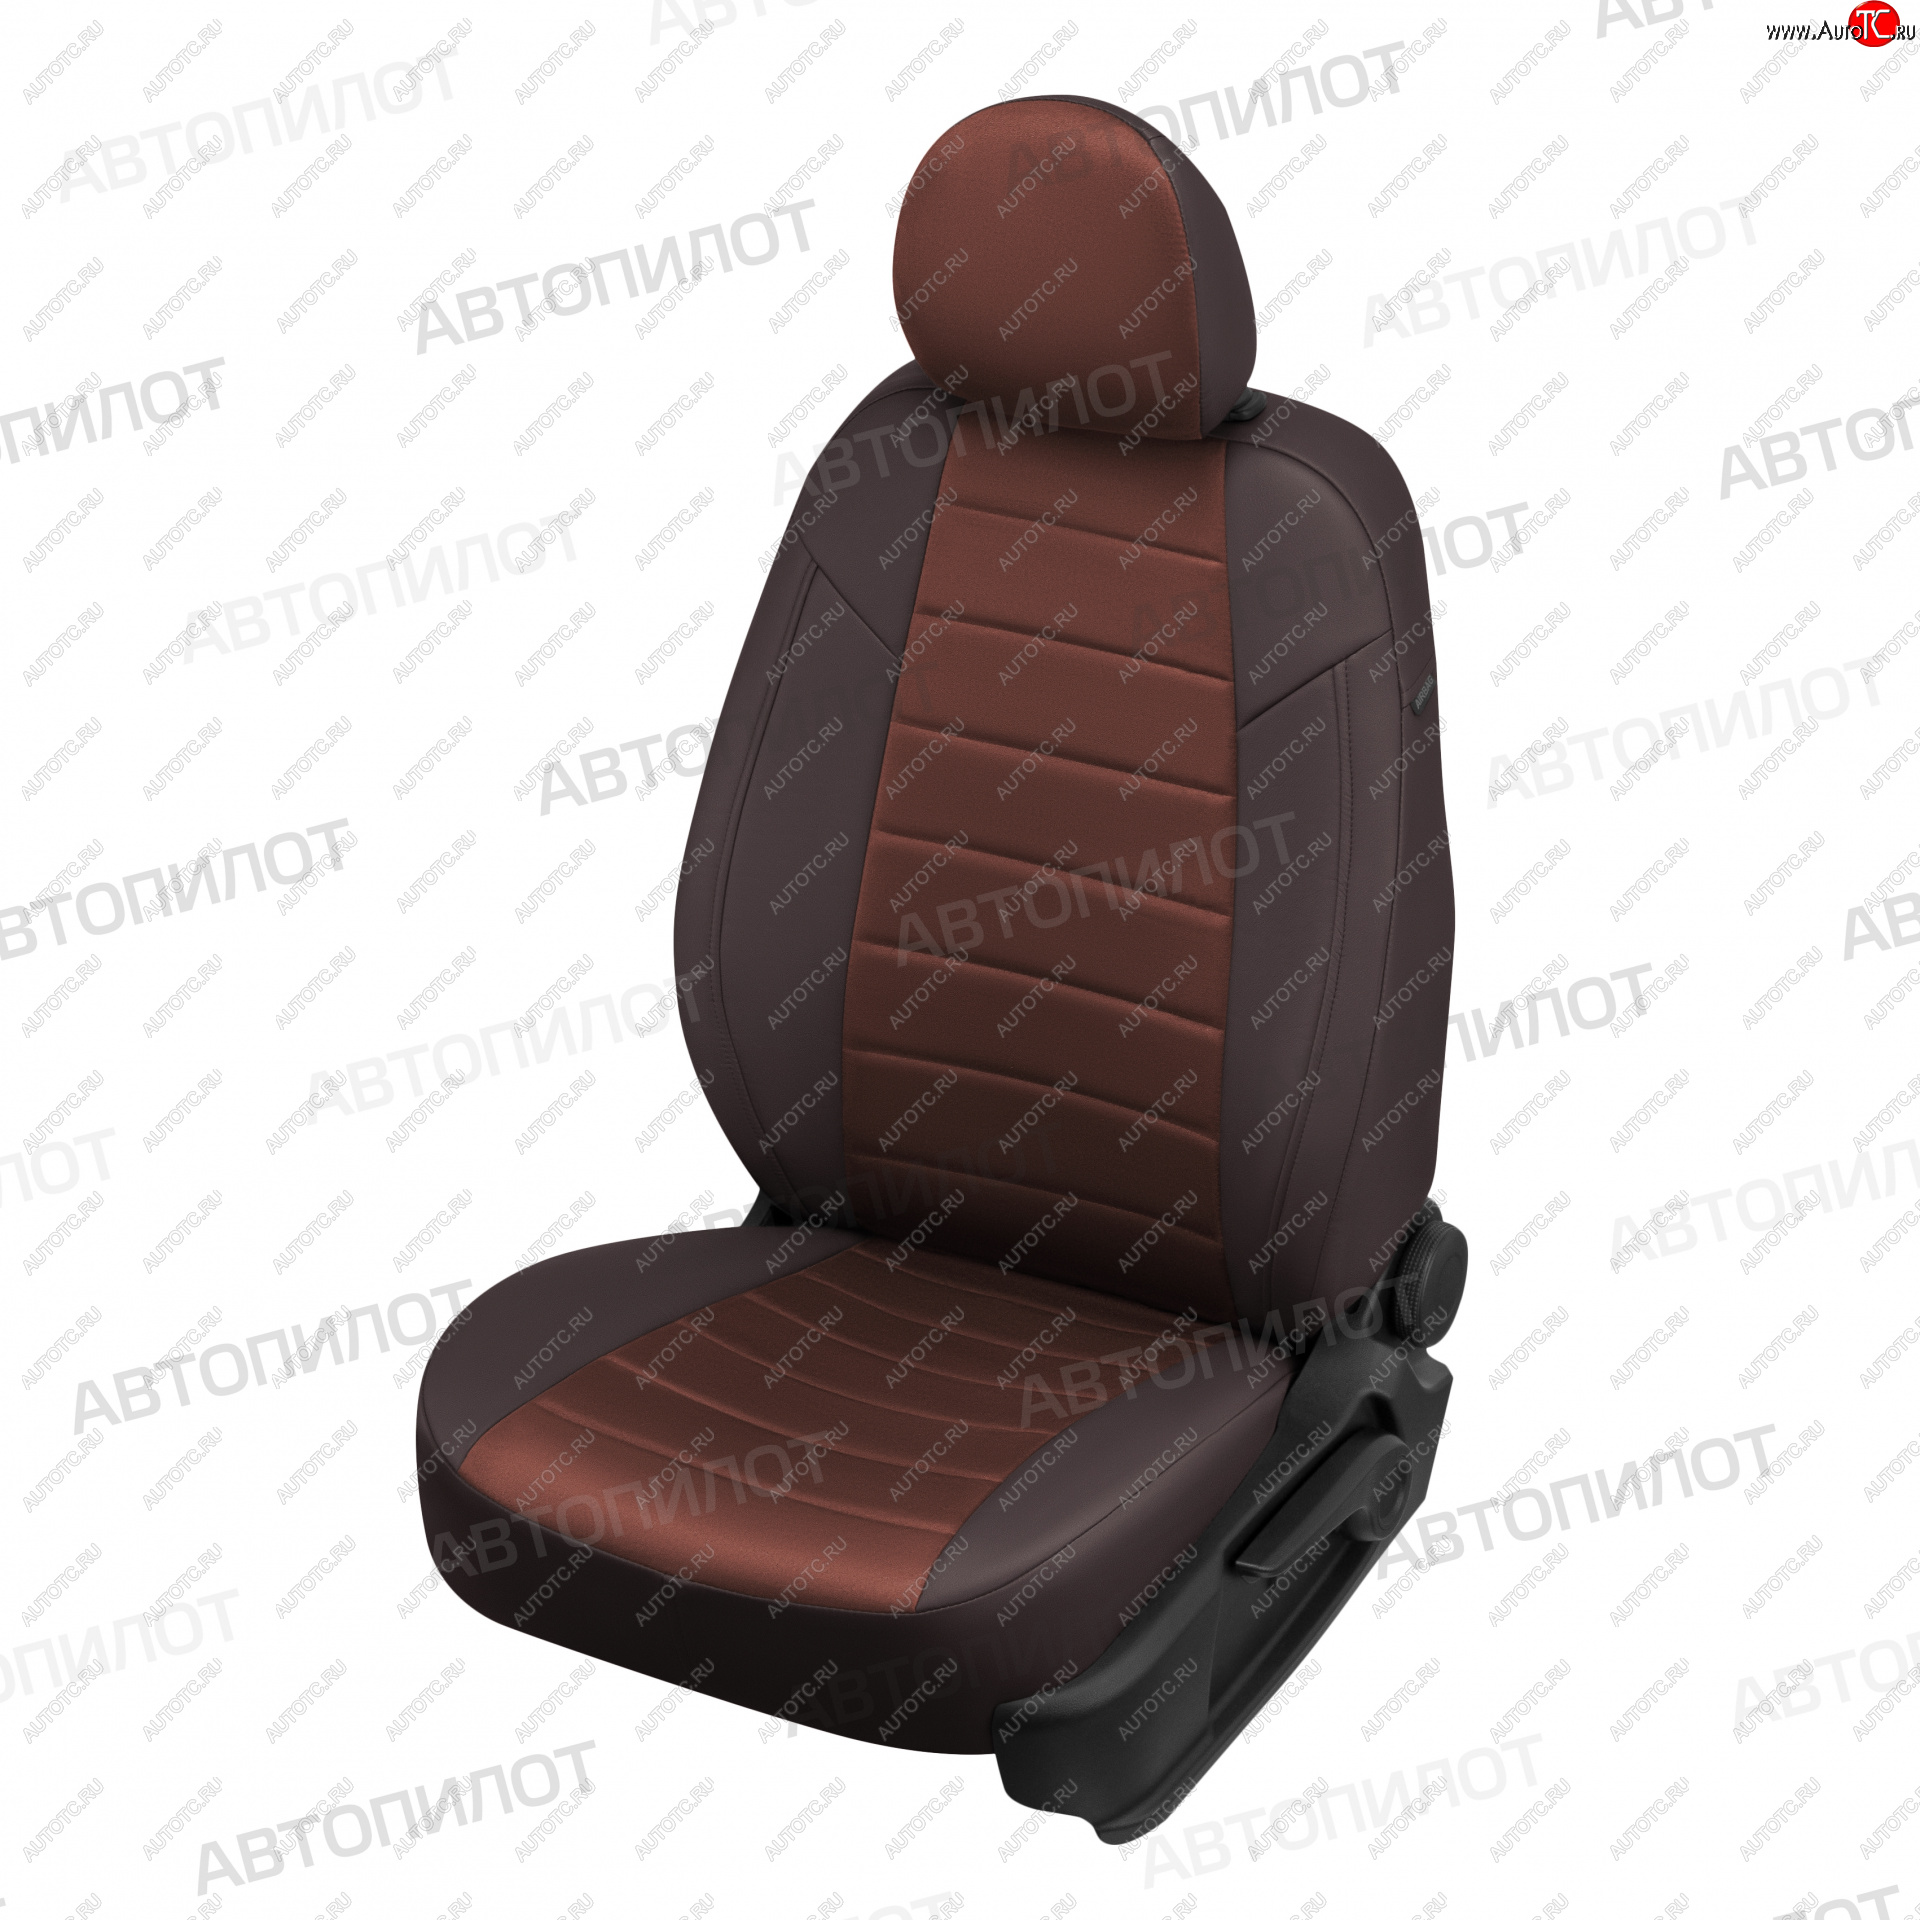 13 449 р. Чехлы сидений (экокожа/алькантара) Автопилот  Honda CR-V  RD4,RD5,RD6,RD7,RD9  (2001-2006) (шоколад)